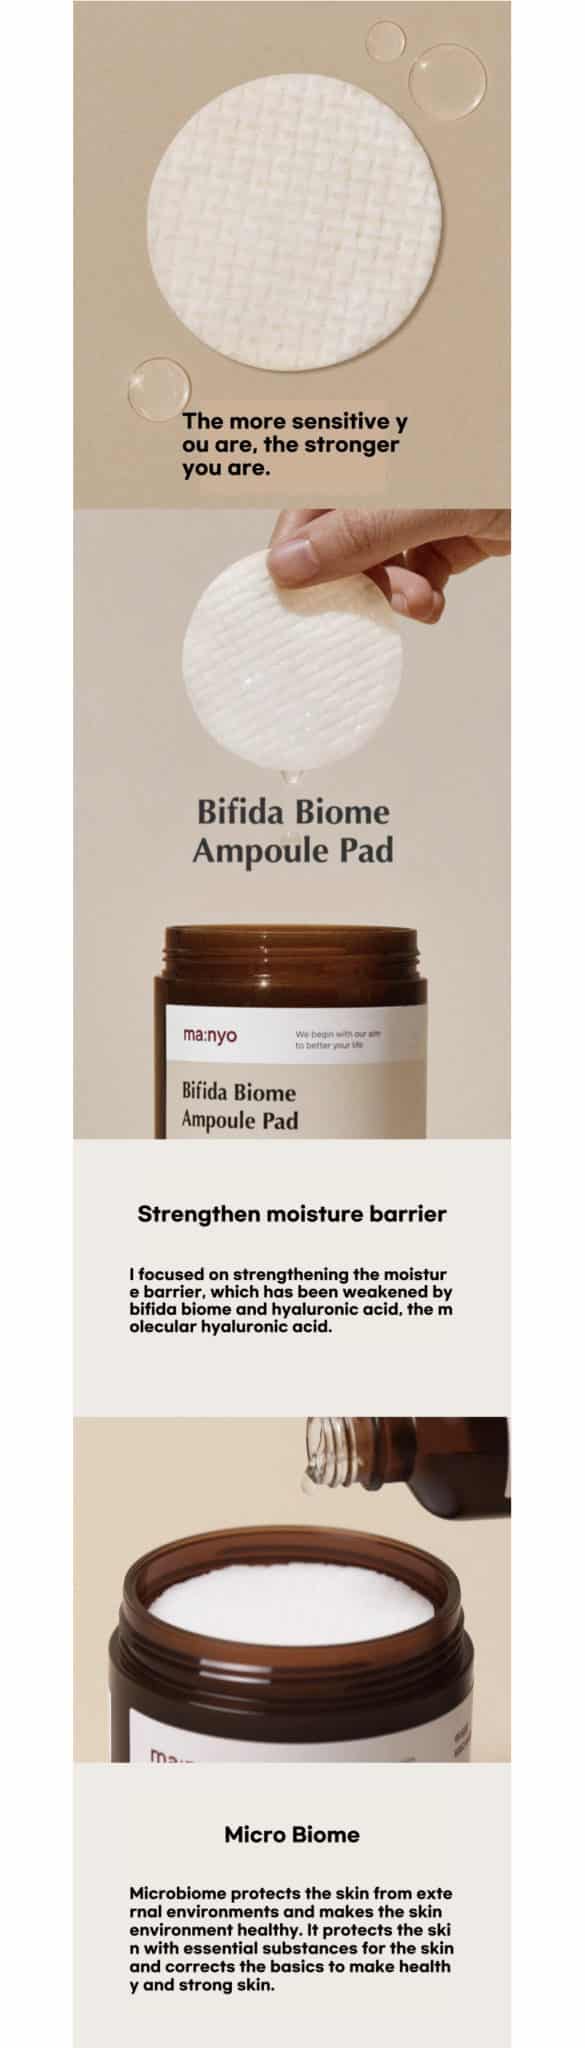 ma:nyo Bifida Biome Ampoule Pad